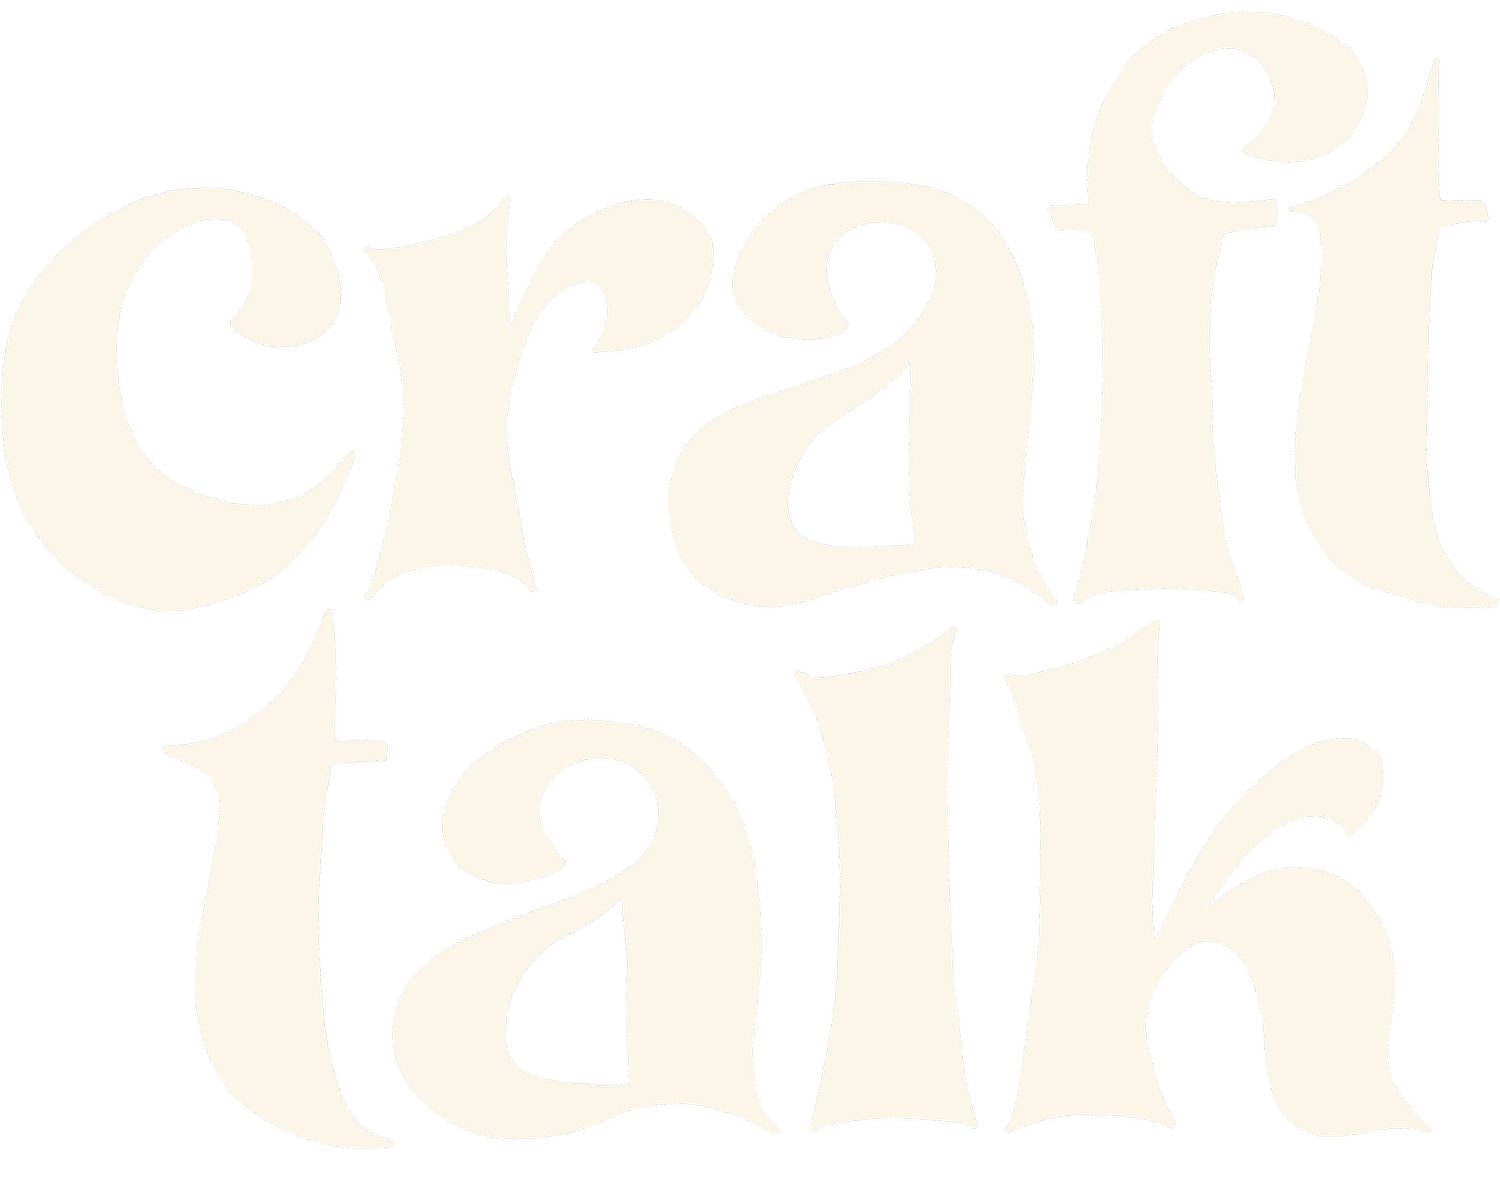 Craft Talk